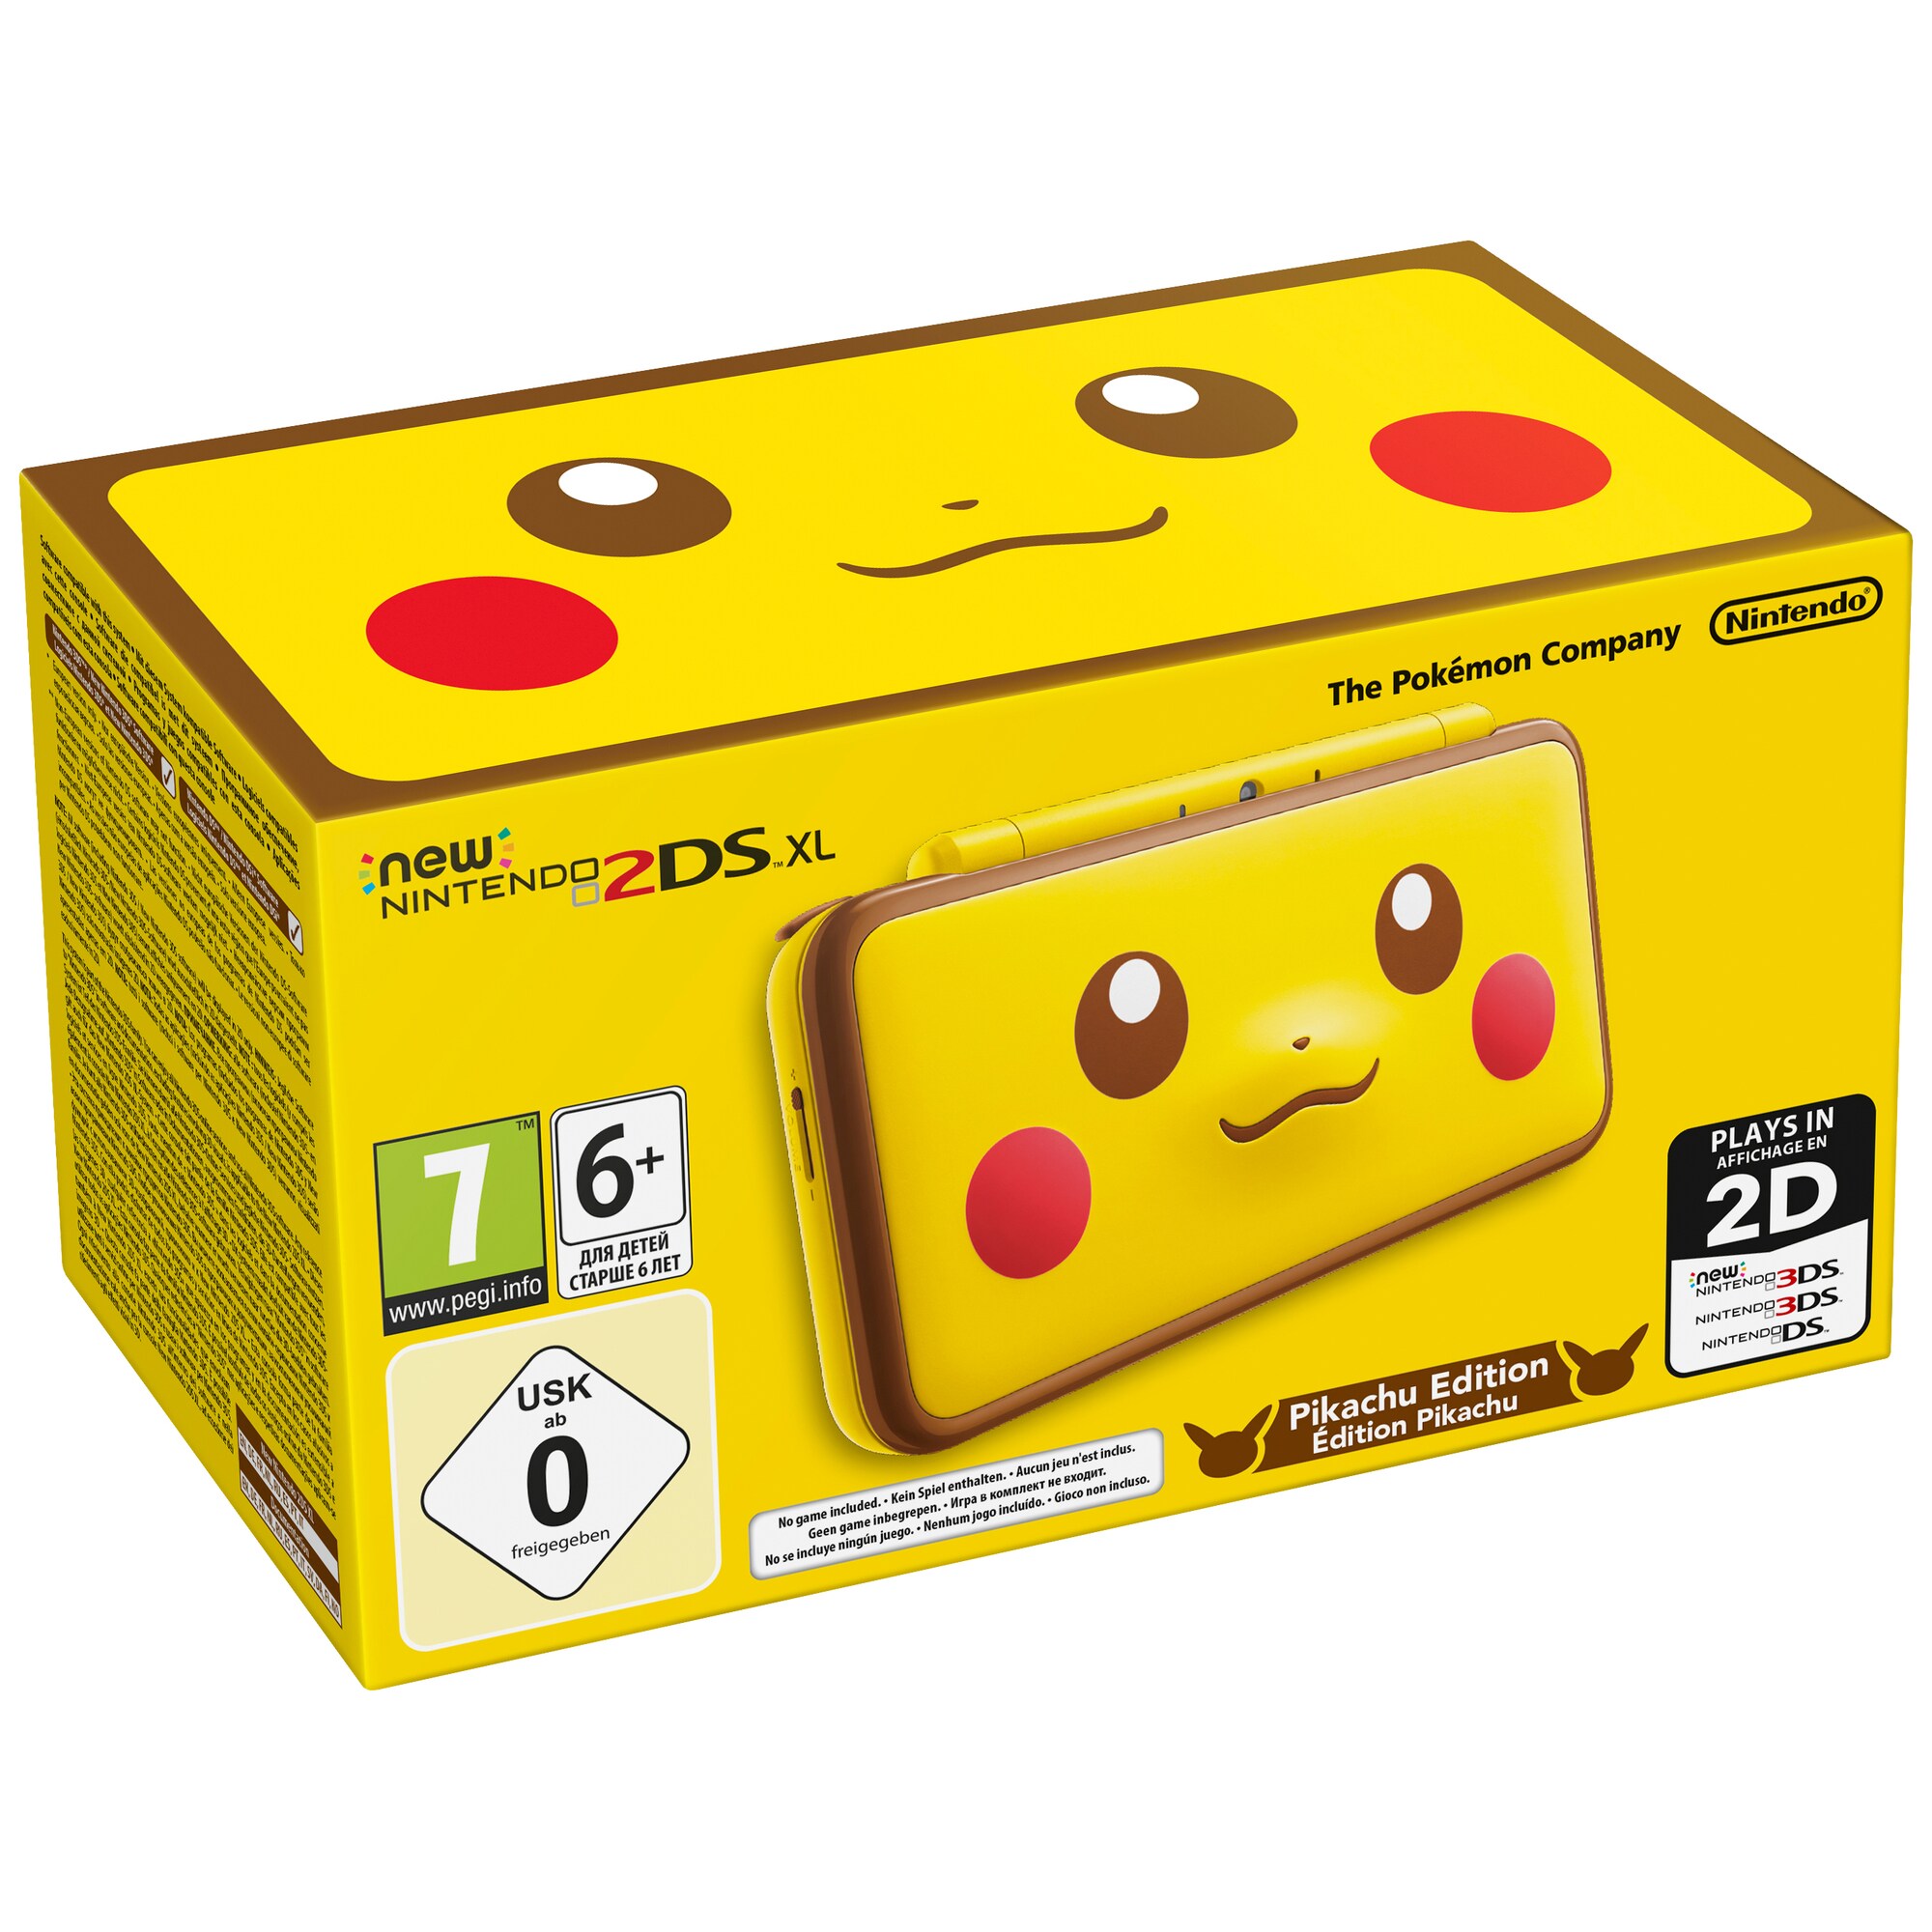 New Nintendo 2DS XL konsol: Pikachu edition